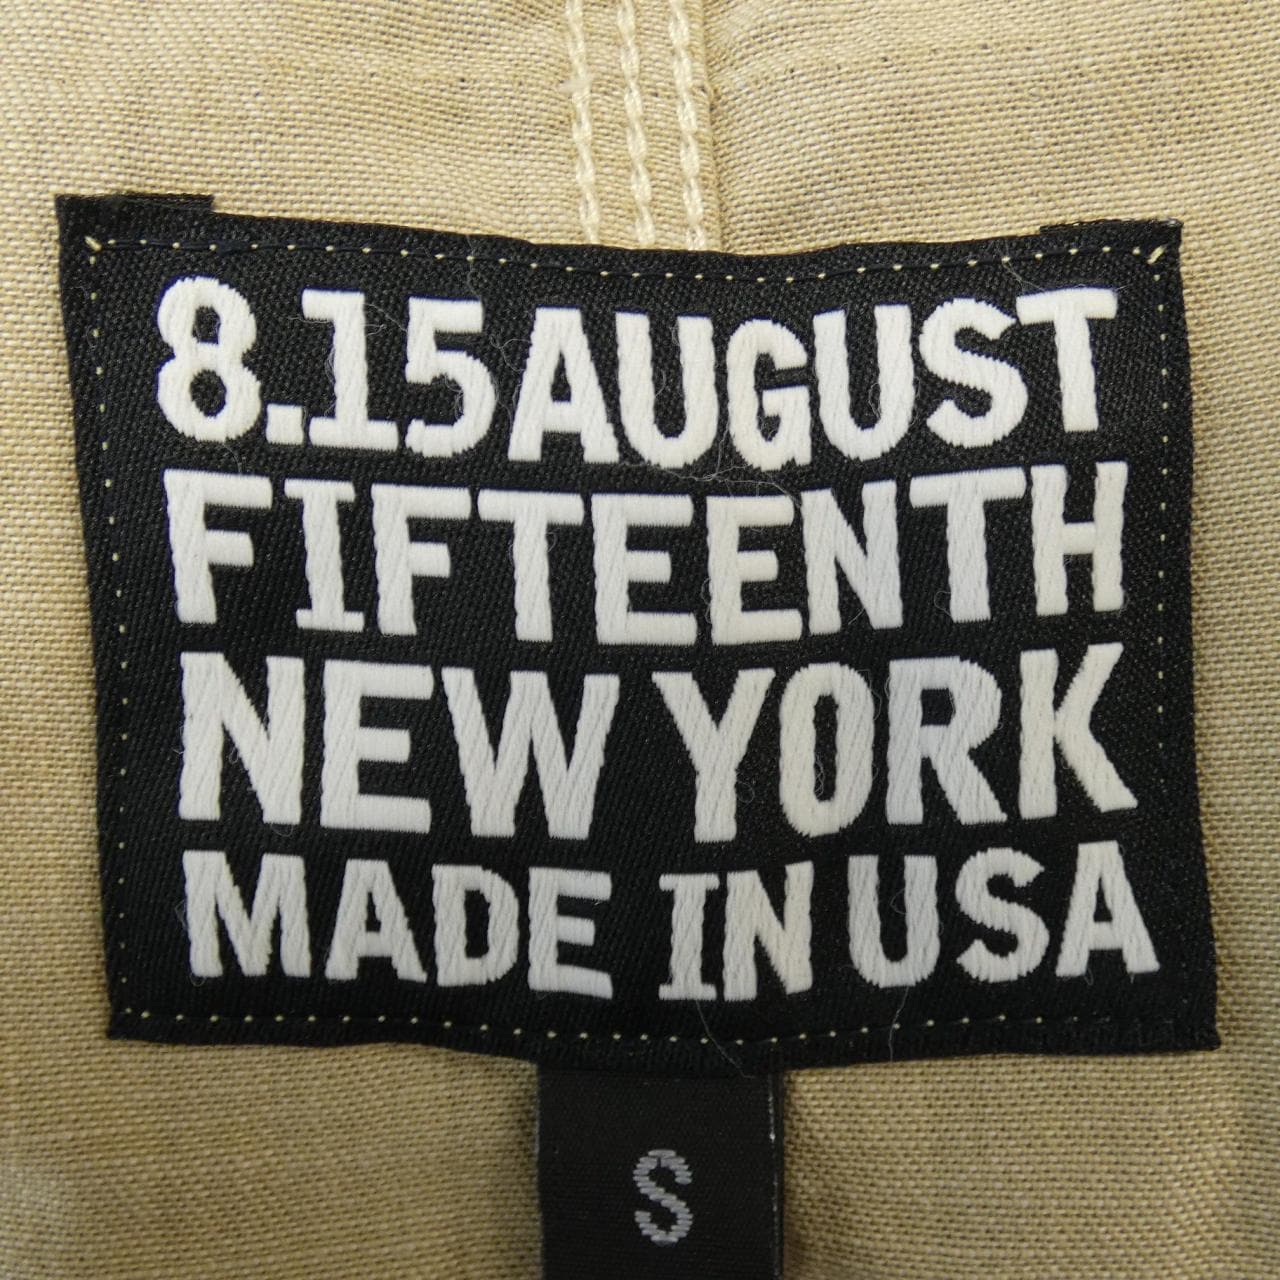 8.15AUGUST FIFTEENTH jacket